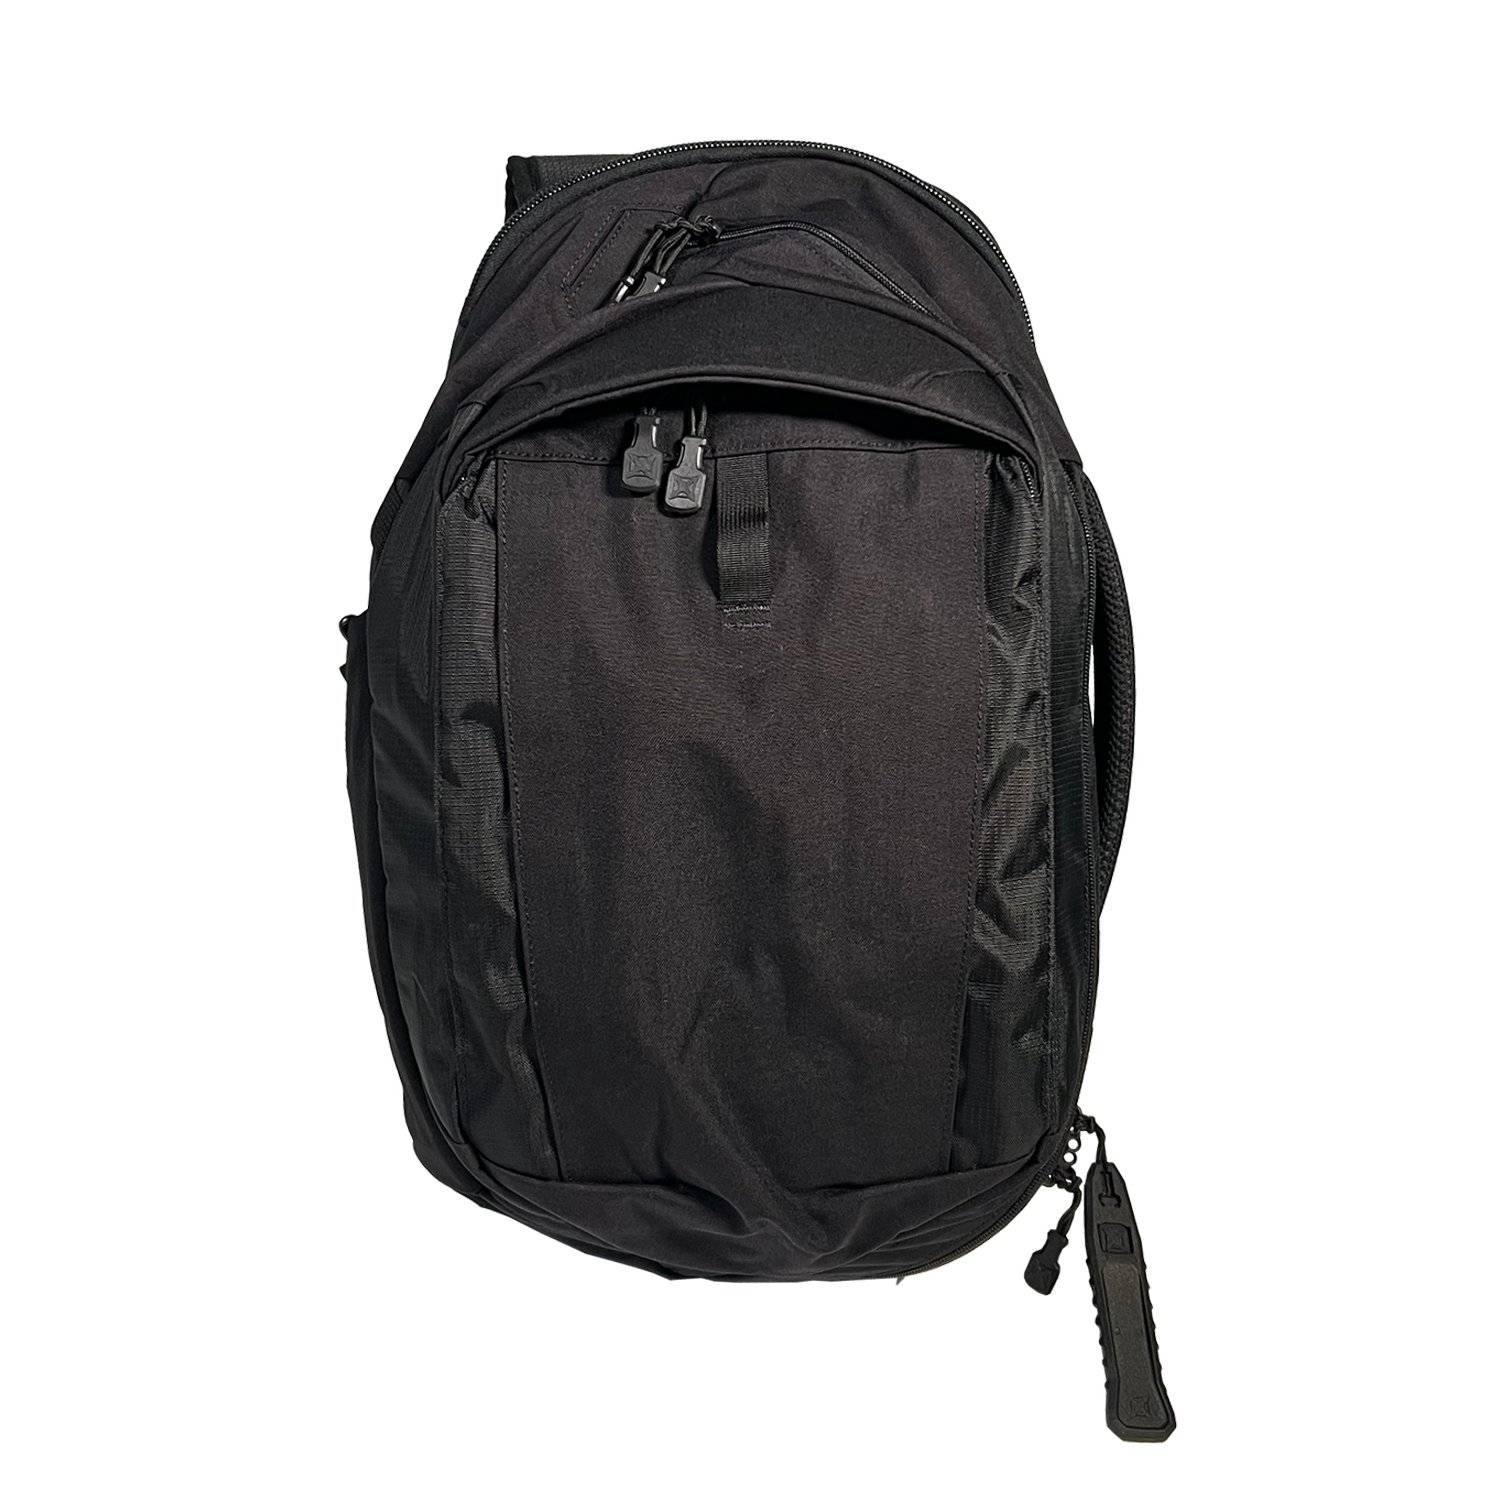 RUSH LBD LIMA 56L: Heavy-duty Duffel Bag/Backpack